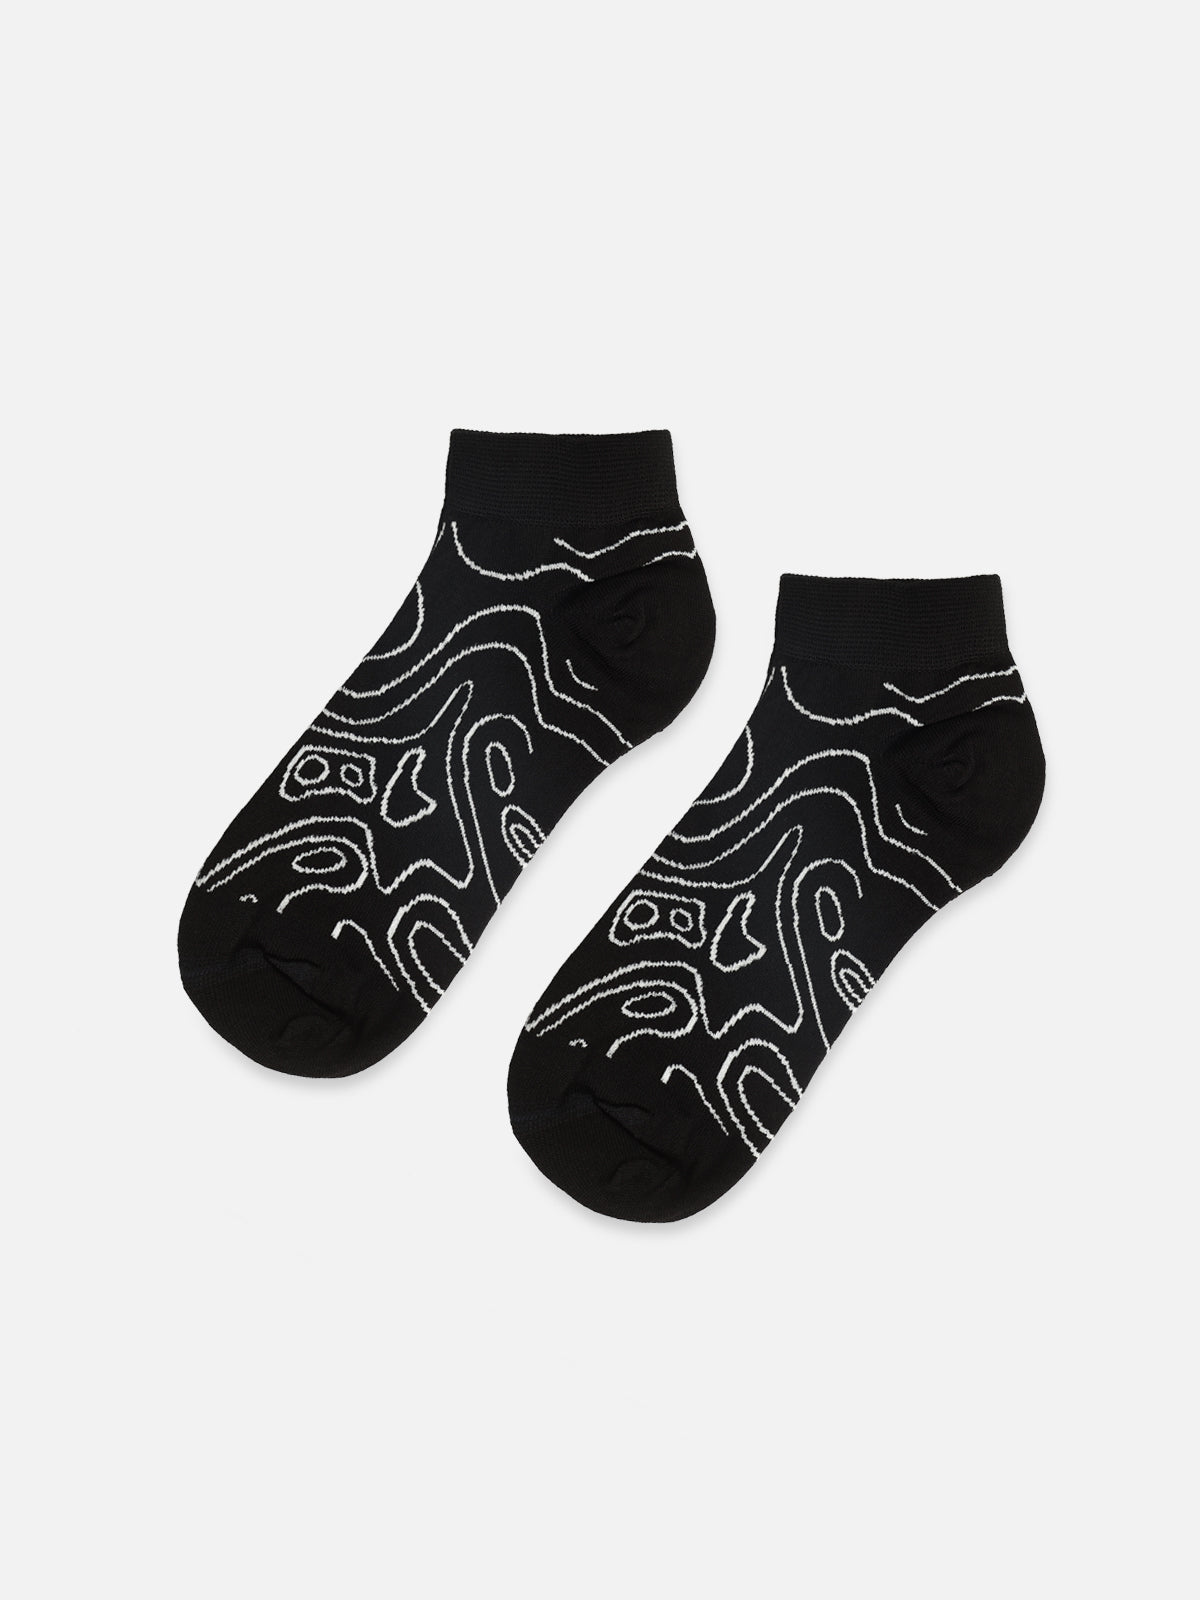 Black & White Ankle Sock - FWAS23-005